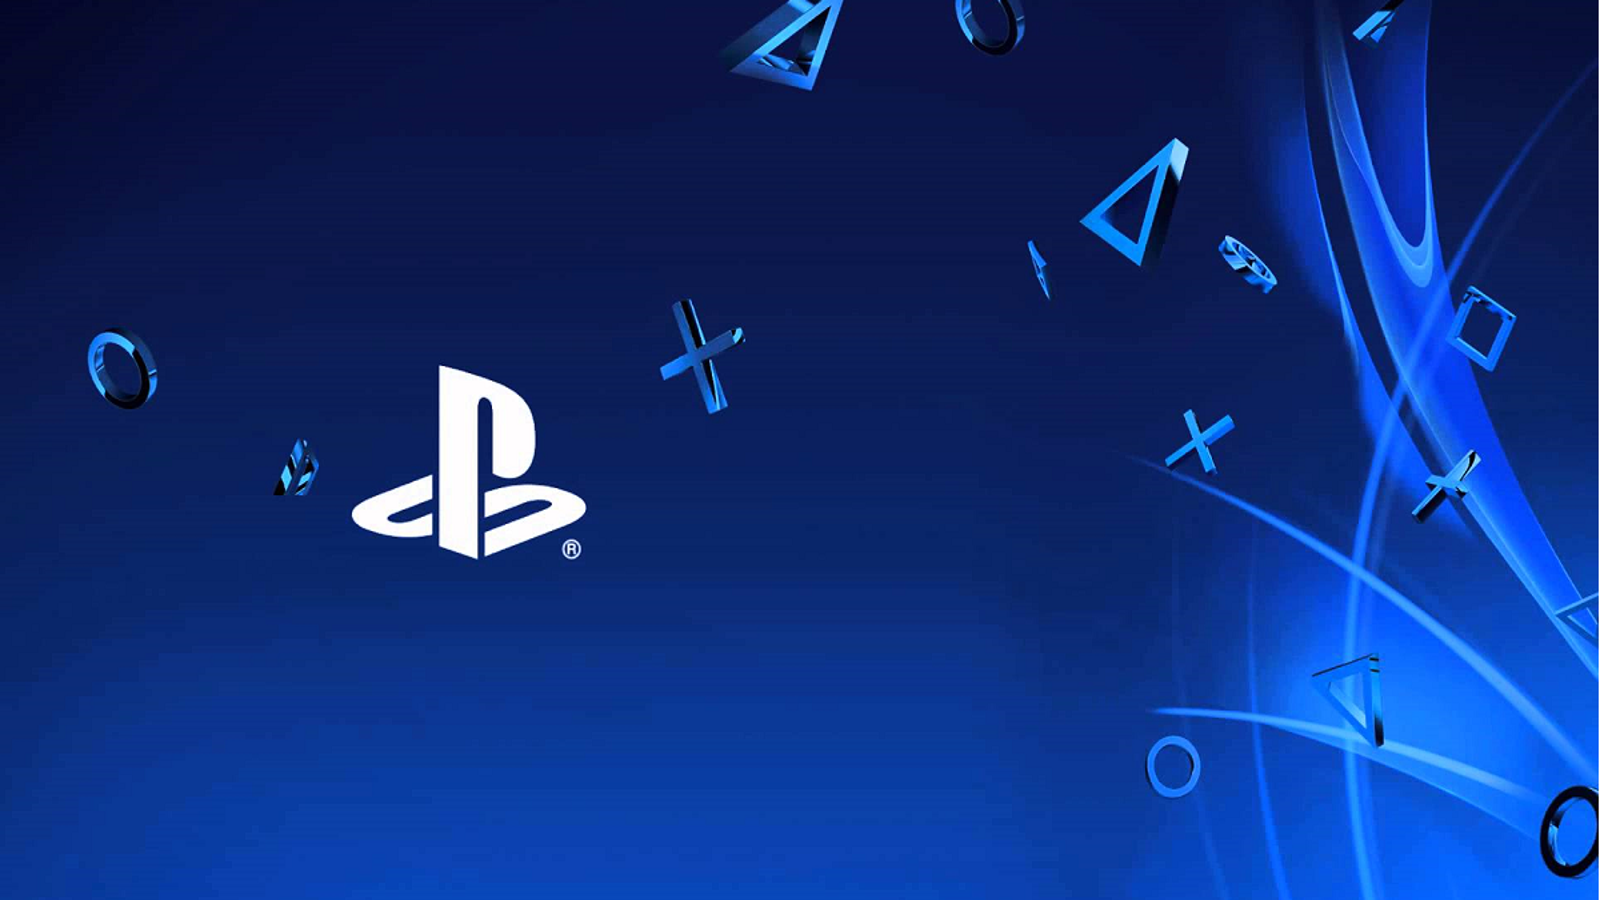 Sony CEO Speaks On PS4 Cross-Platform Play - Game Informer